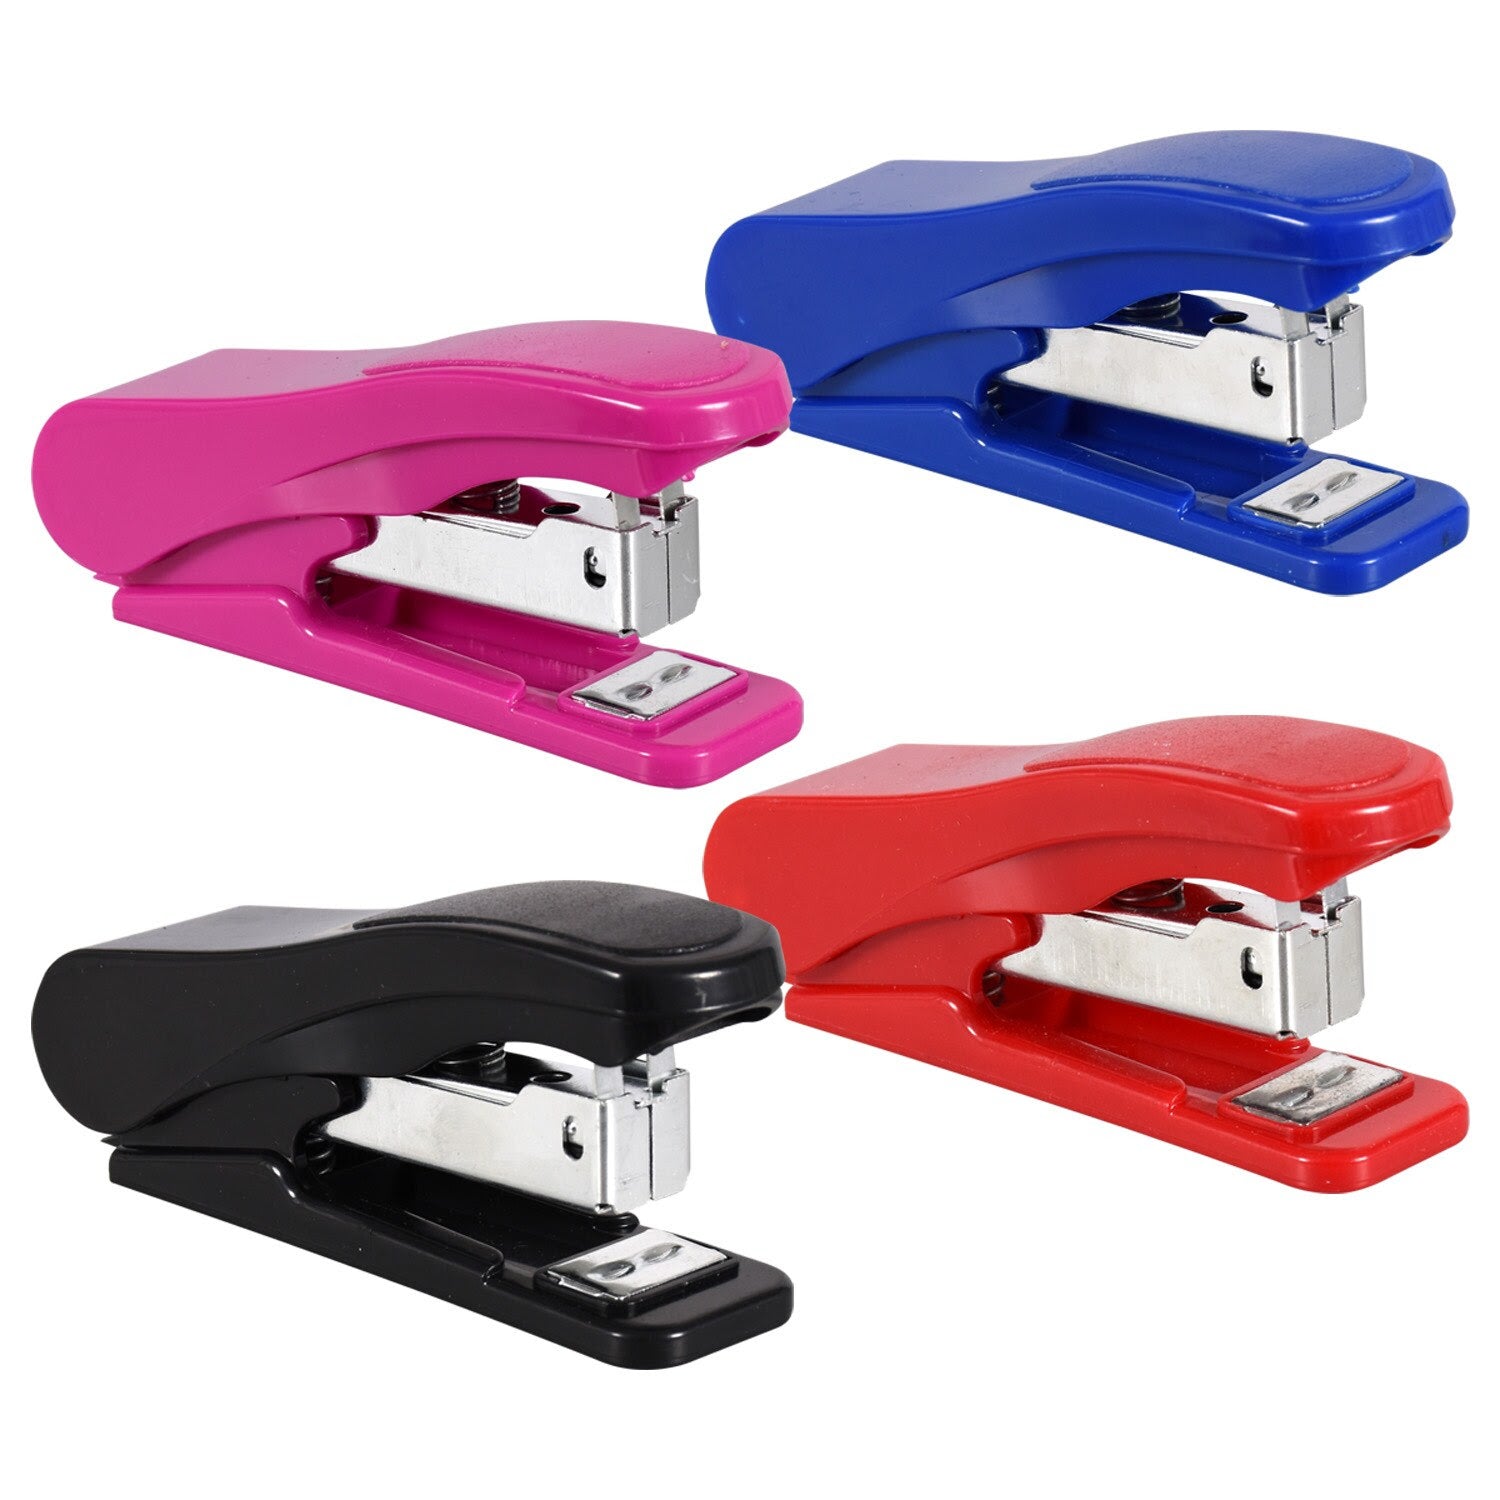 Colored Mini Staplers